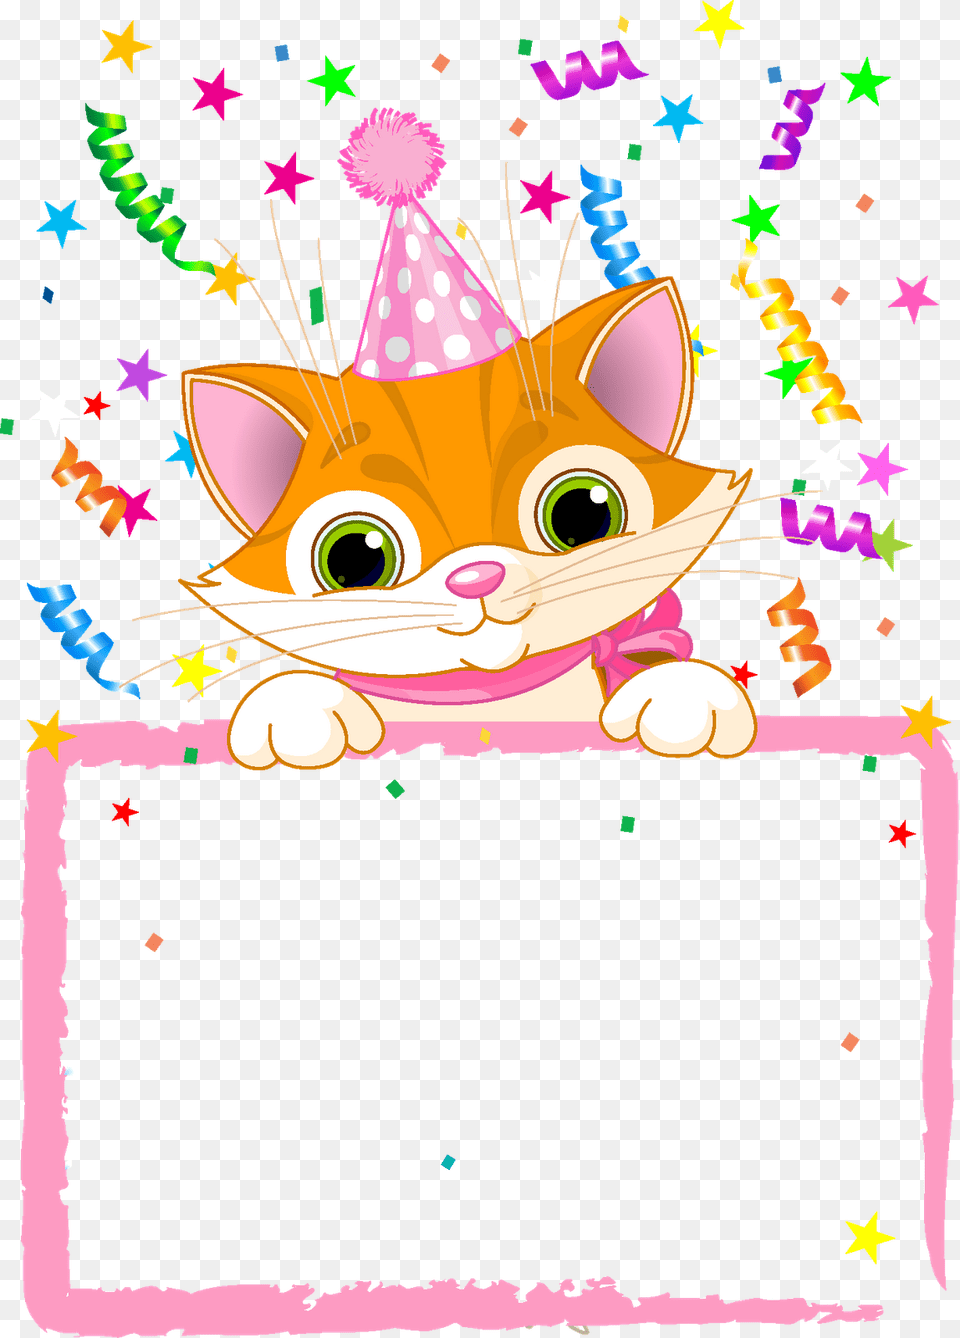 Happy Birthday Art Birthday Birthday Wishes Happy Birthday Cartoon Stickers, Clothing, Hat, Dessert, Birthday Cake Png Image